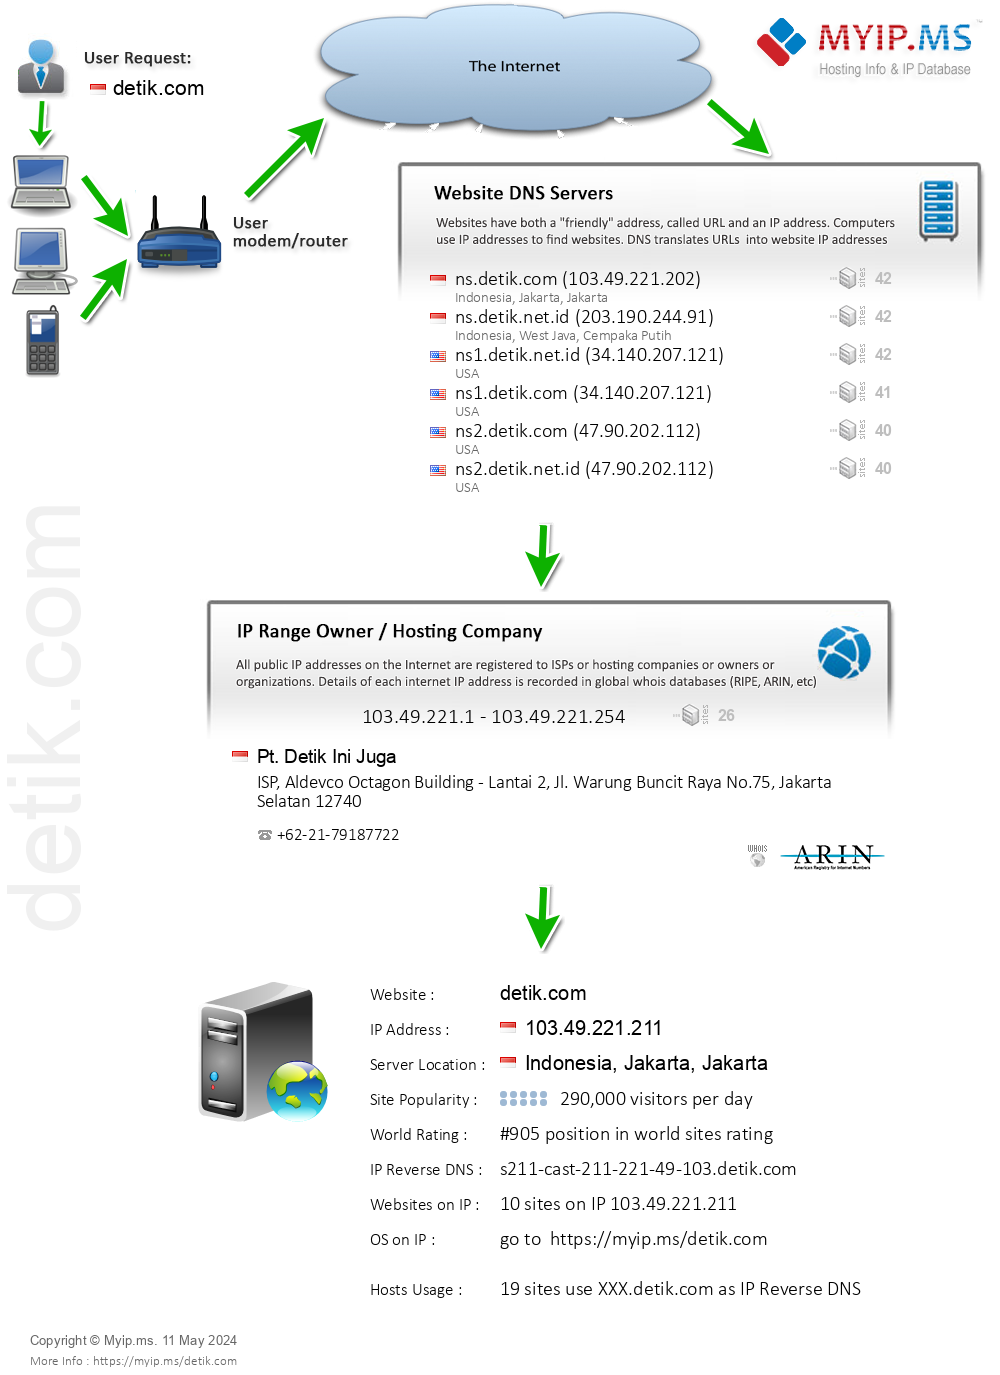 Detik.com - Website Hosting Visual IP Diagram